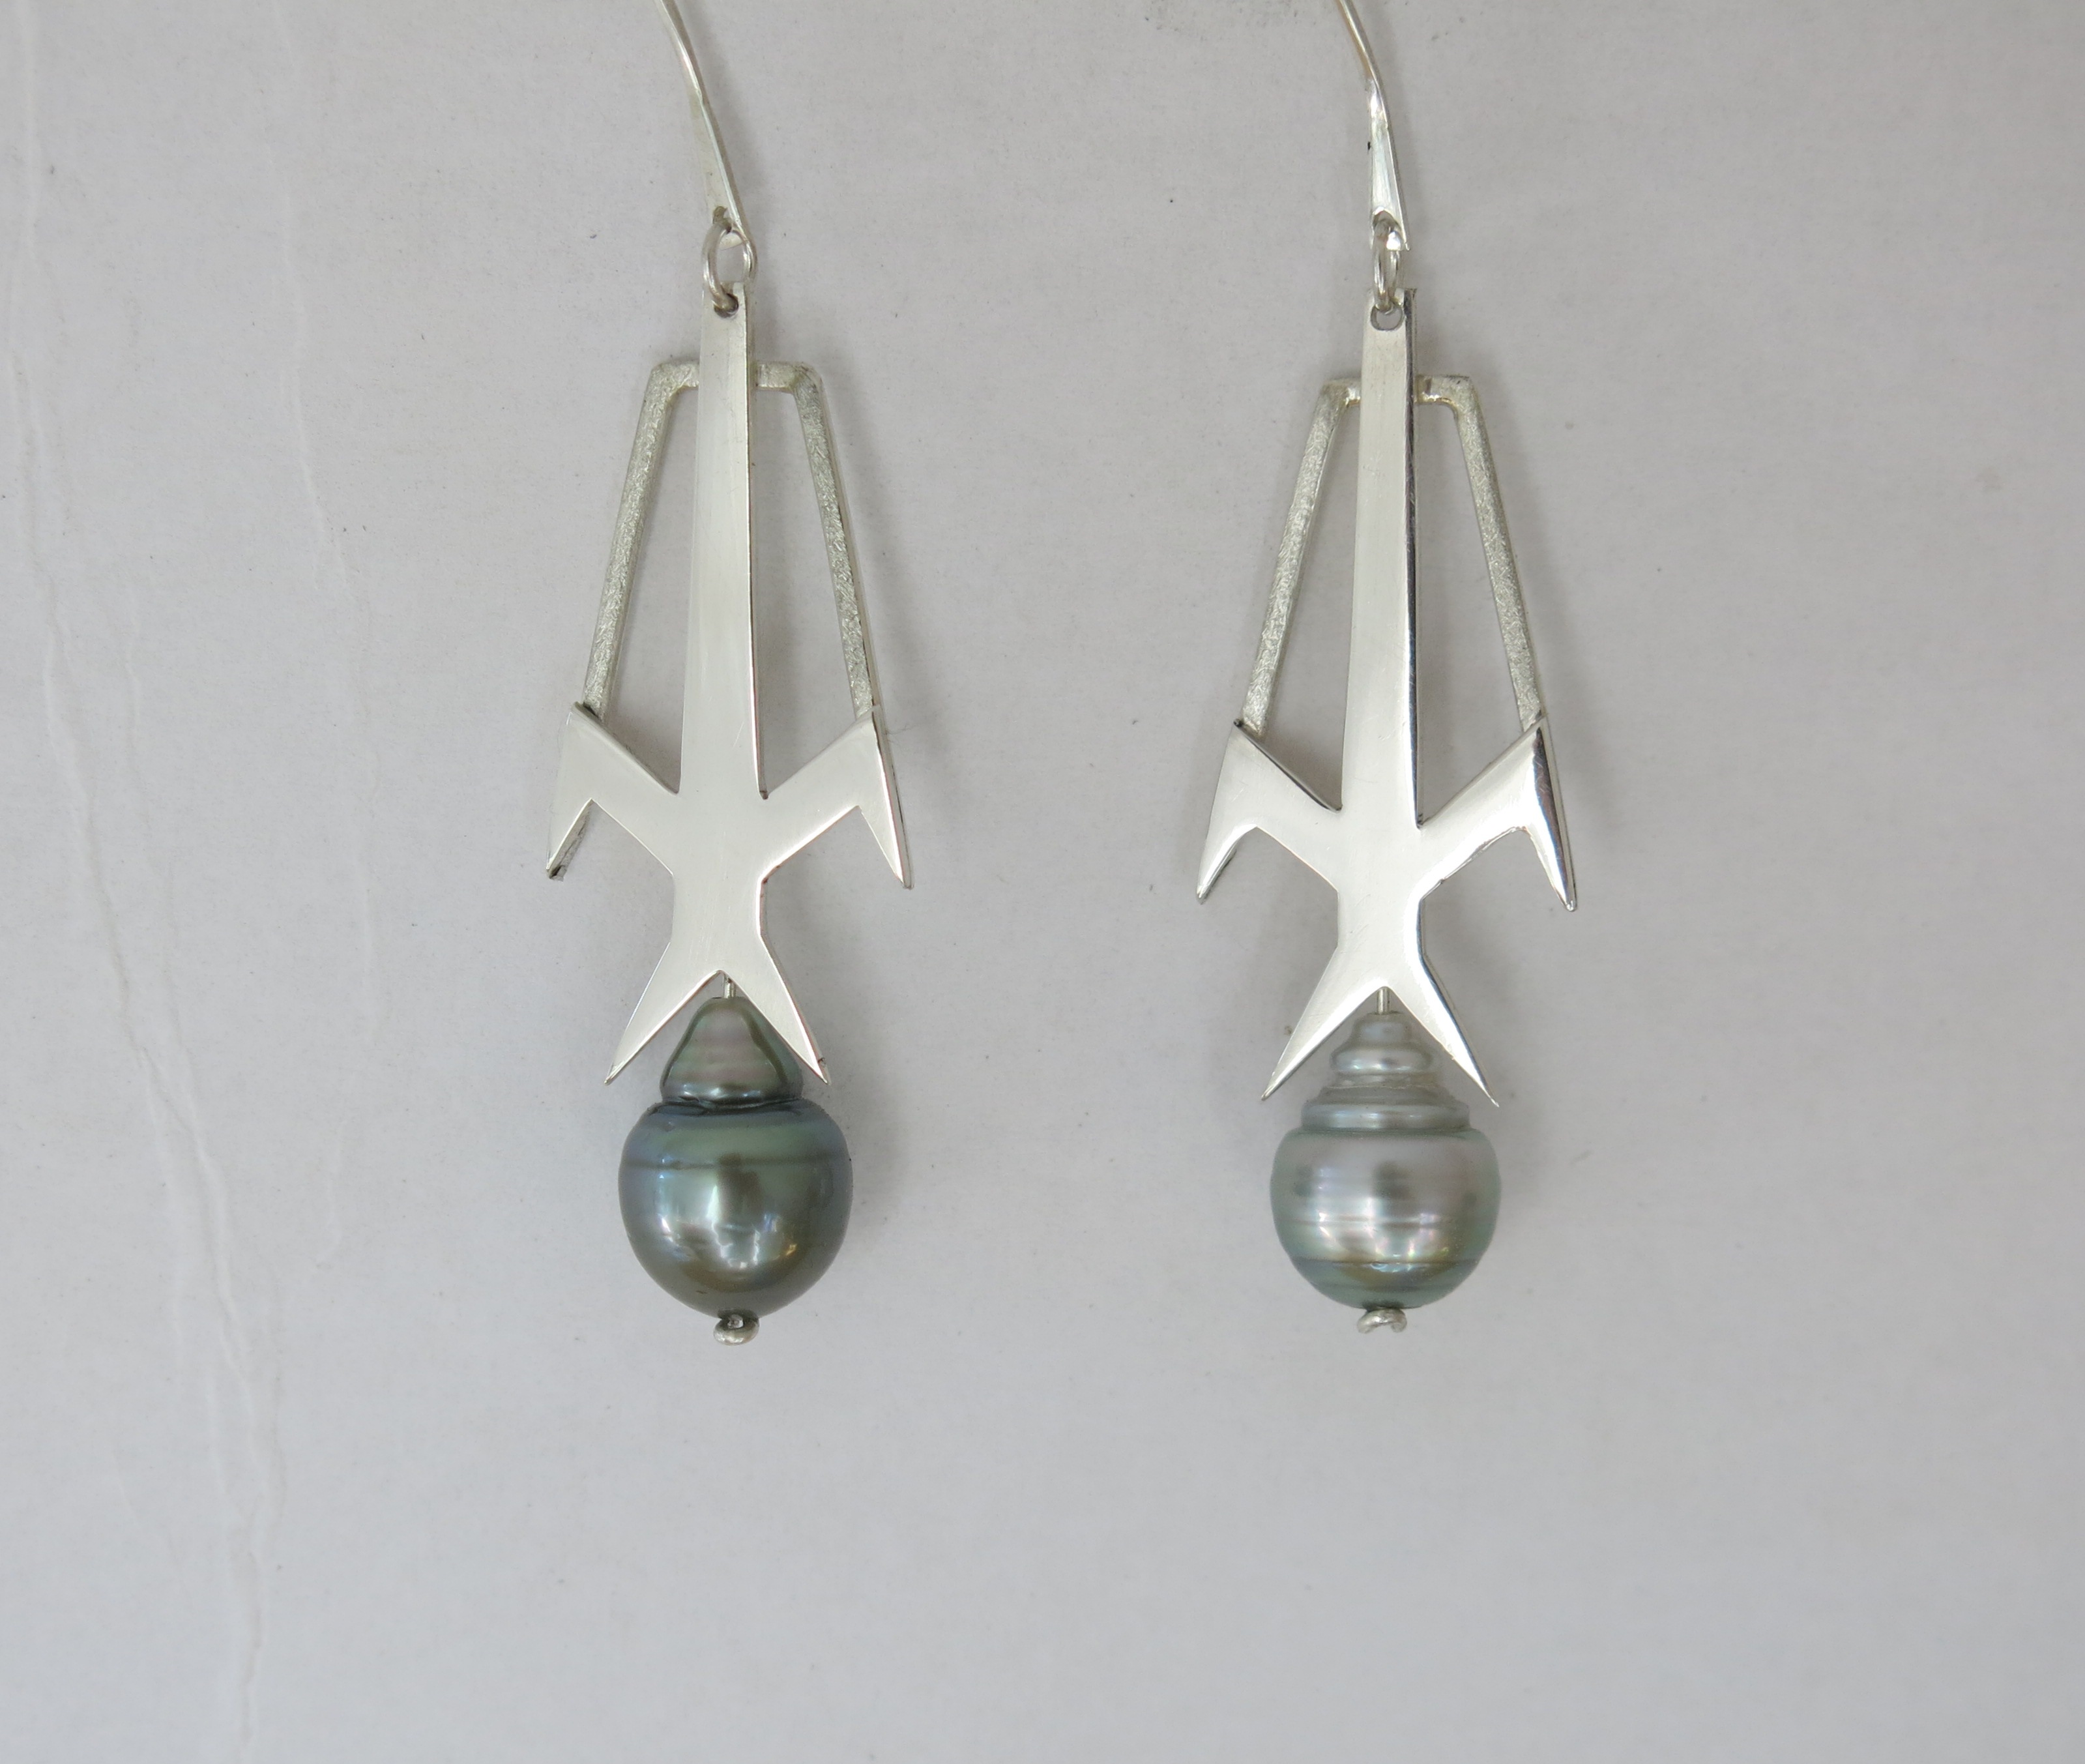 Silver frigate bird earrings with fresh water pearls